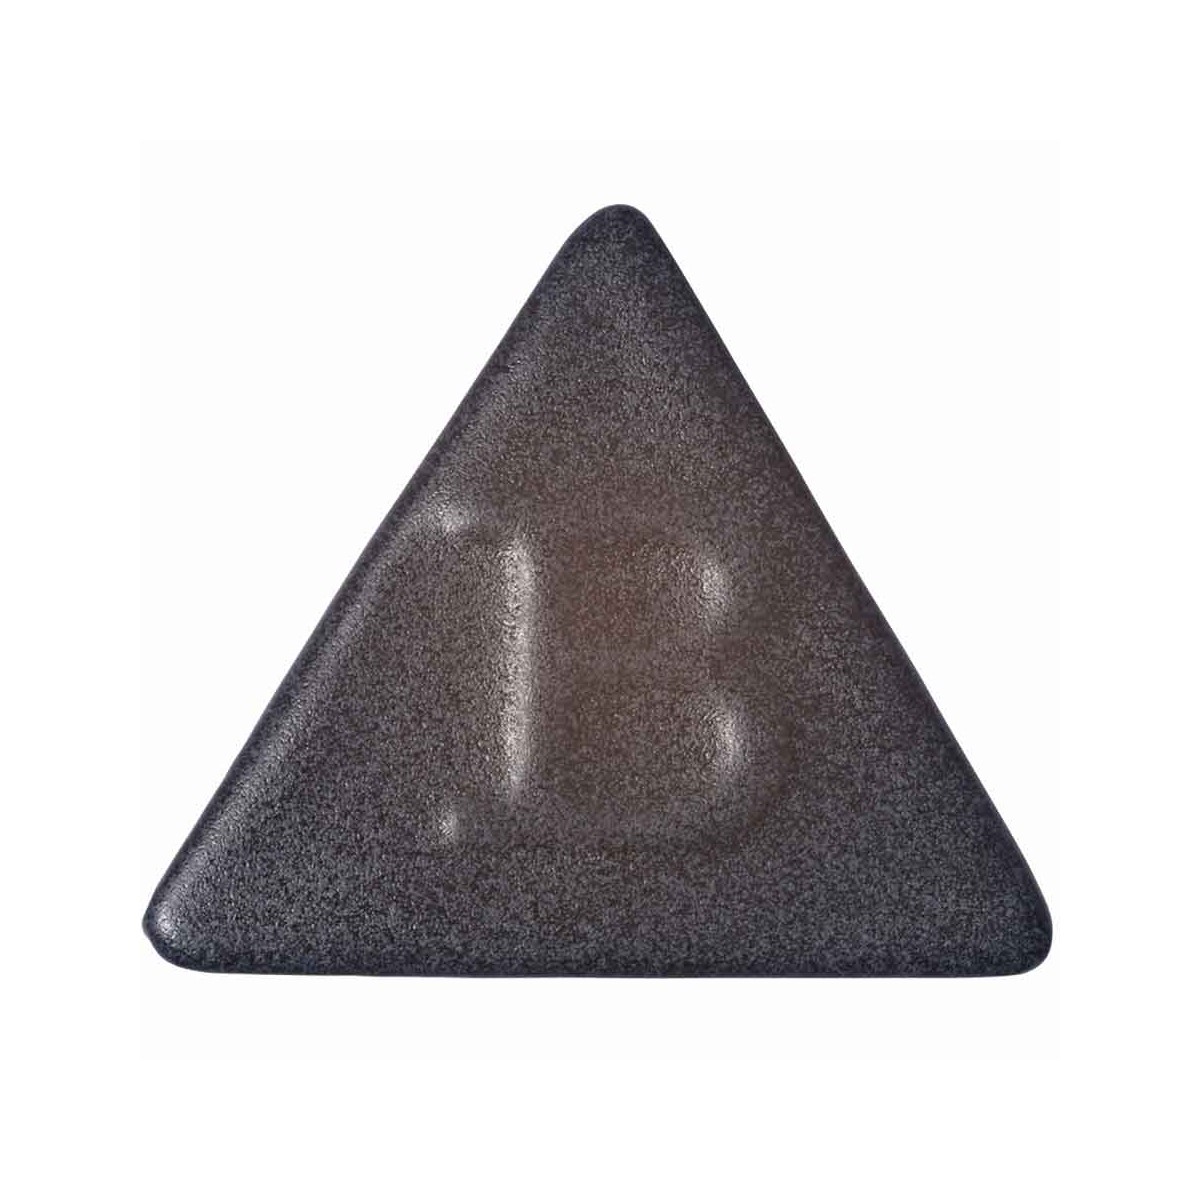 9888 - Noir granit